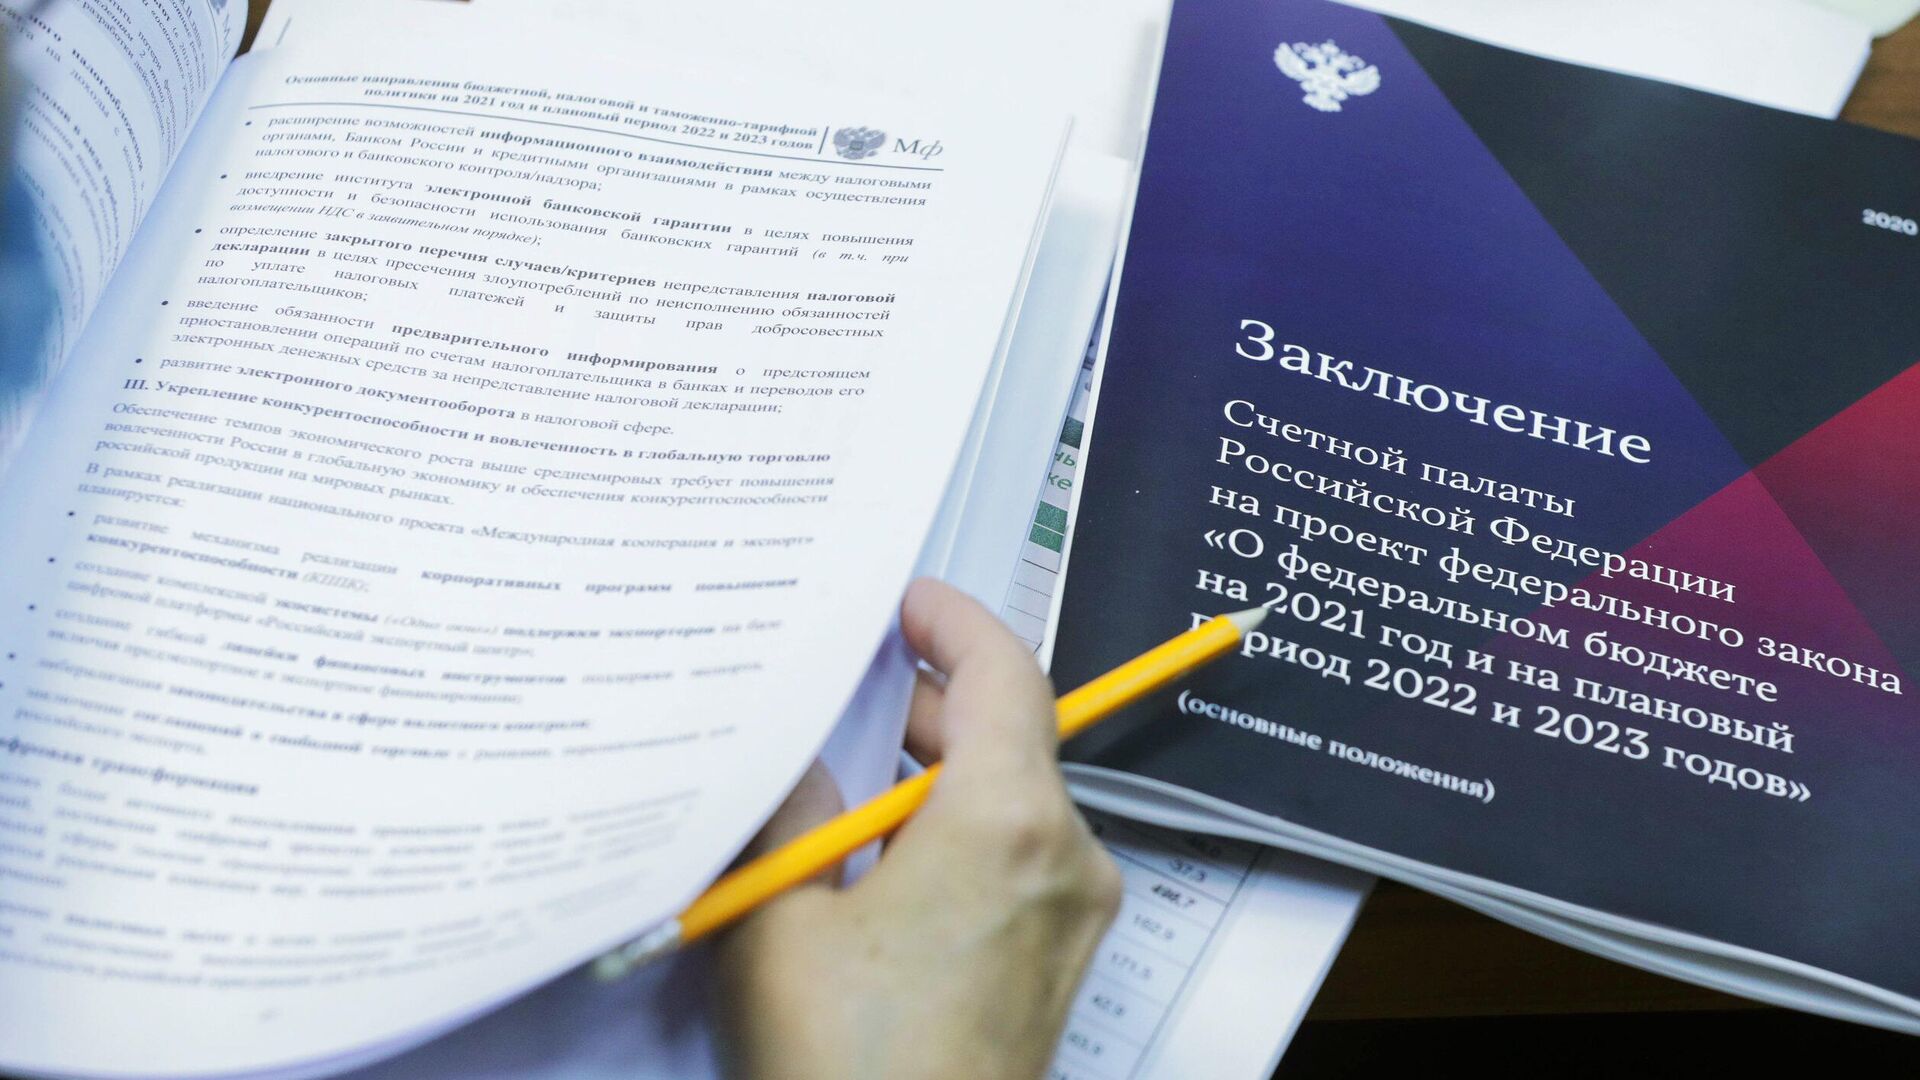 Рассмотрение проекта бюджета на 2021-2023 годы в Госдуме РФ - РИА Новости, 1920, 20.01.2021